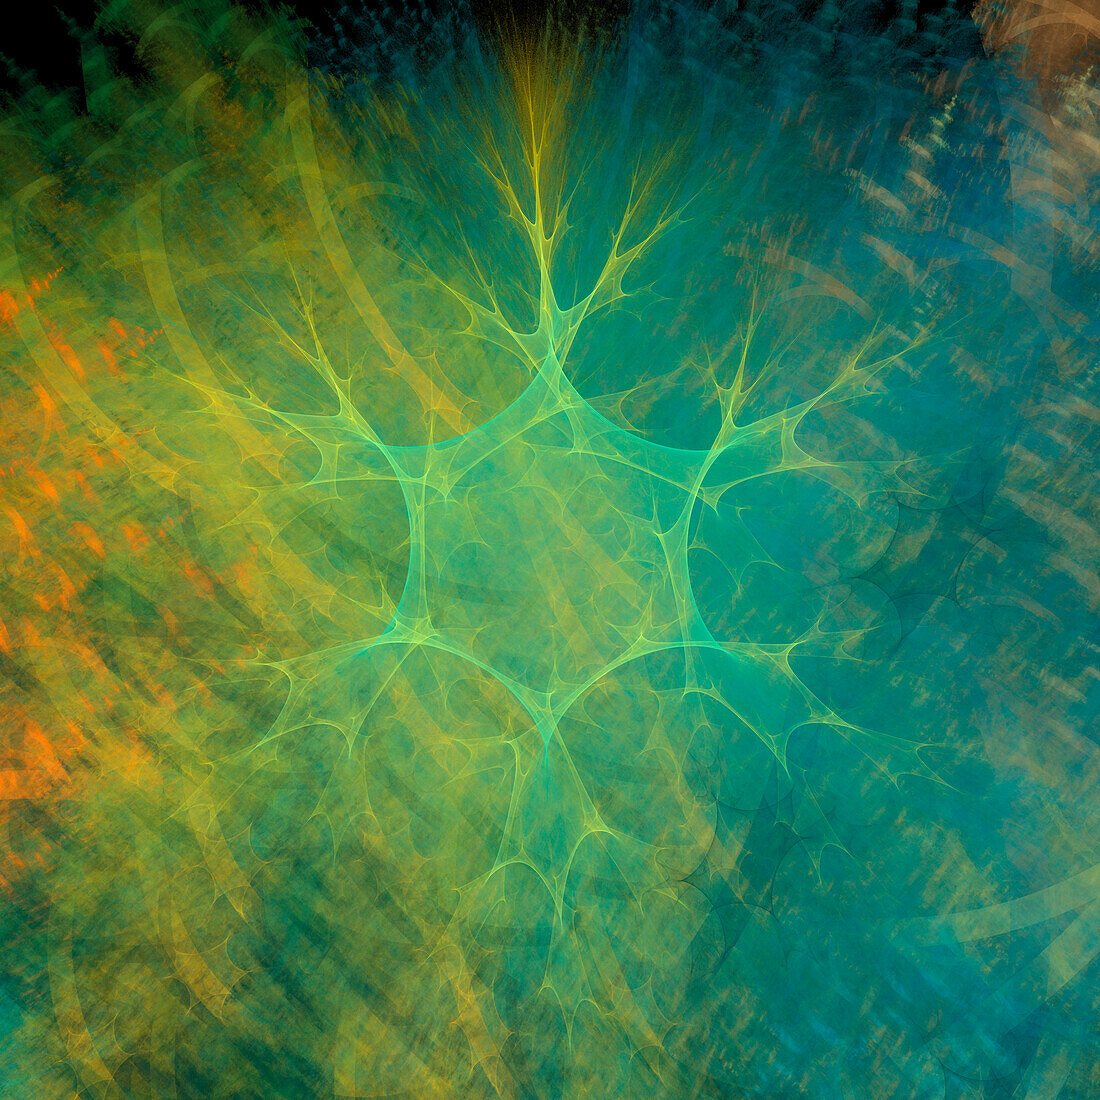 Neuron with dendrites, conceptual illustration